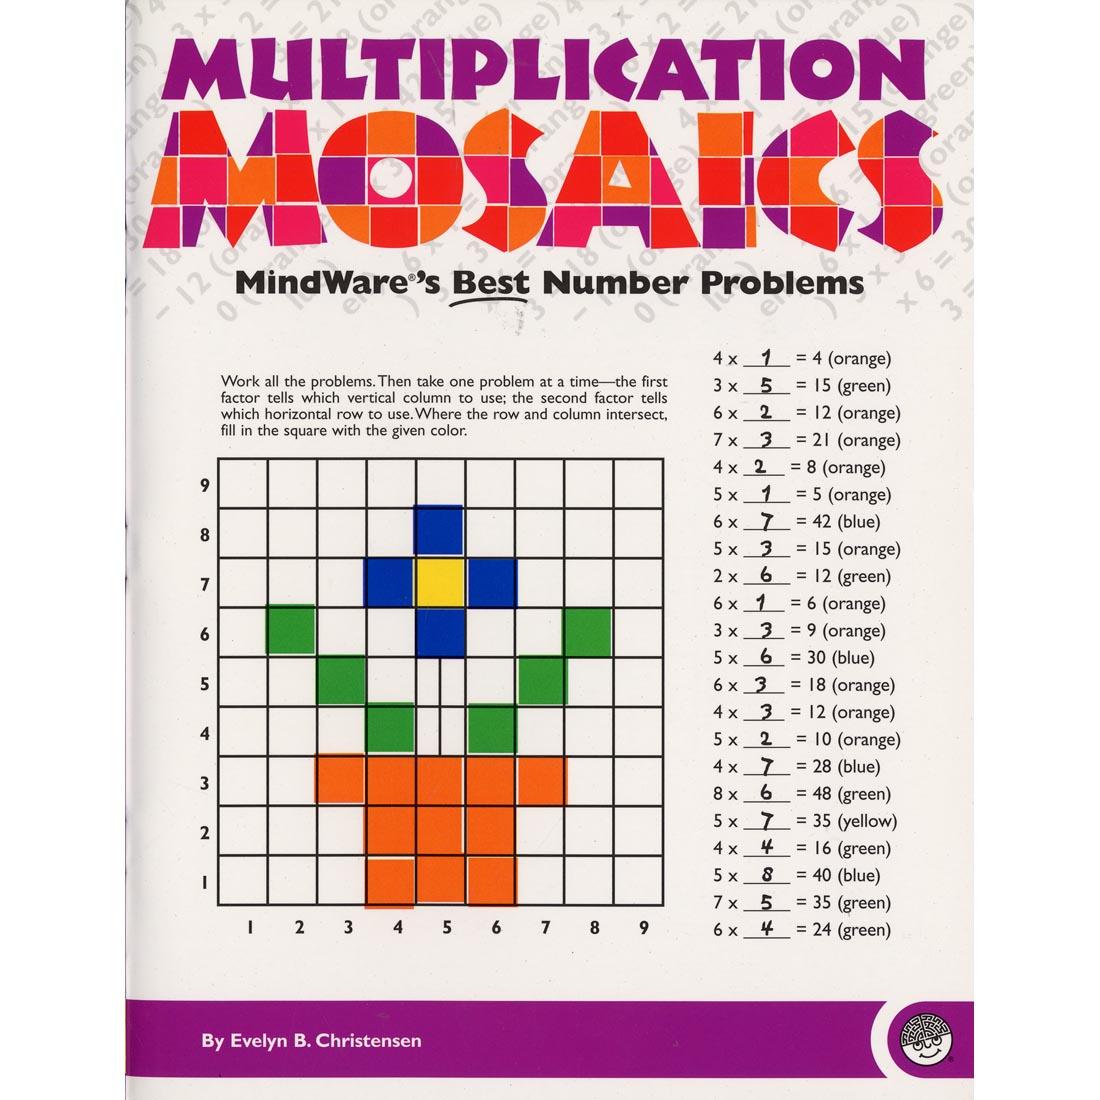 MindWare Multiplication Mosaics